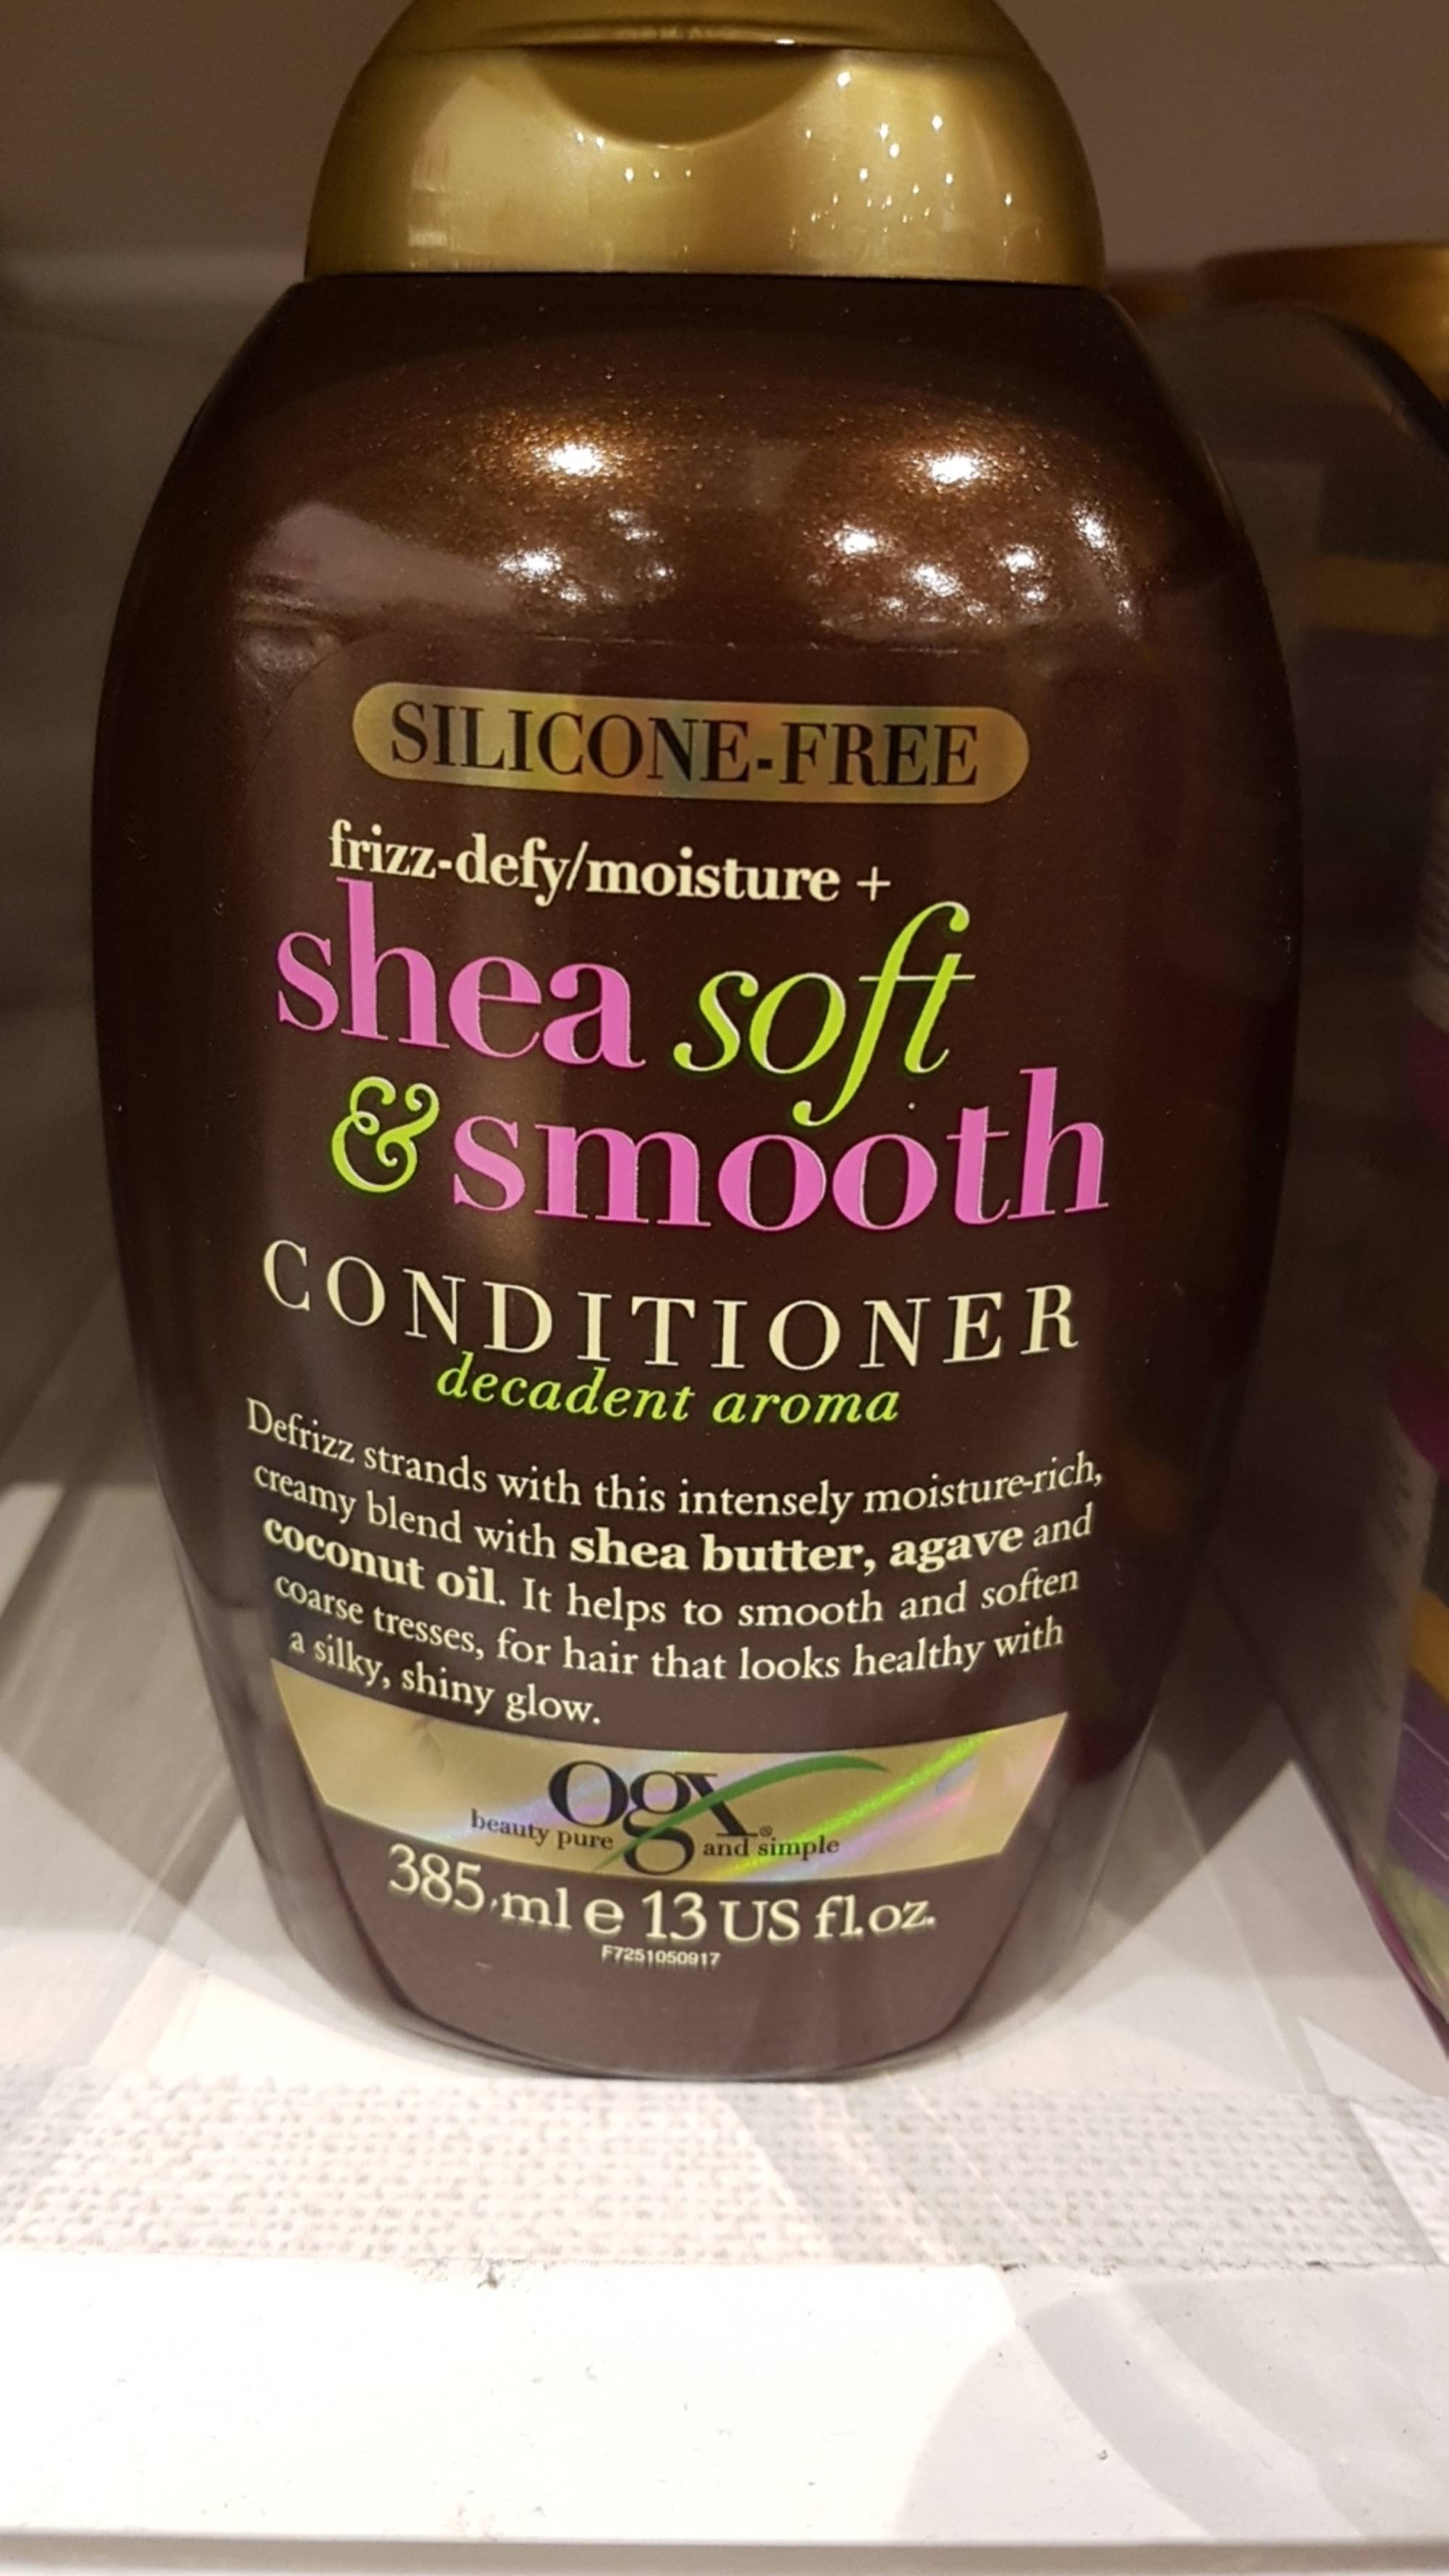 OGX - Shea soft & smooth - Conditioner decadent aroma